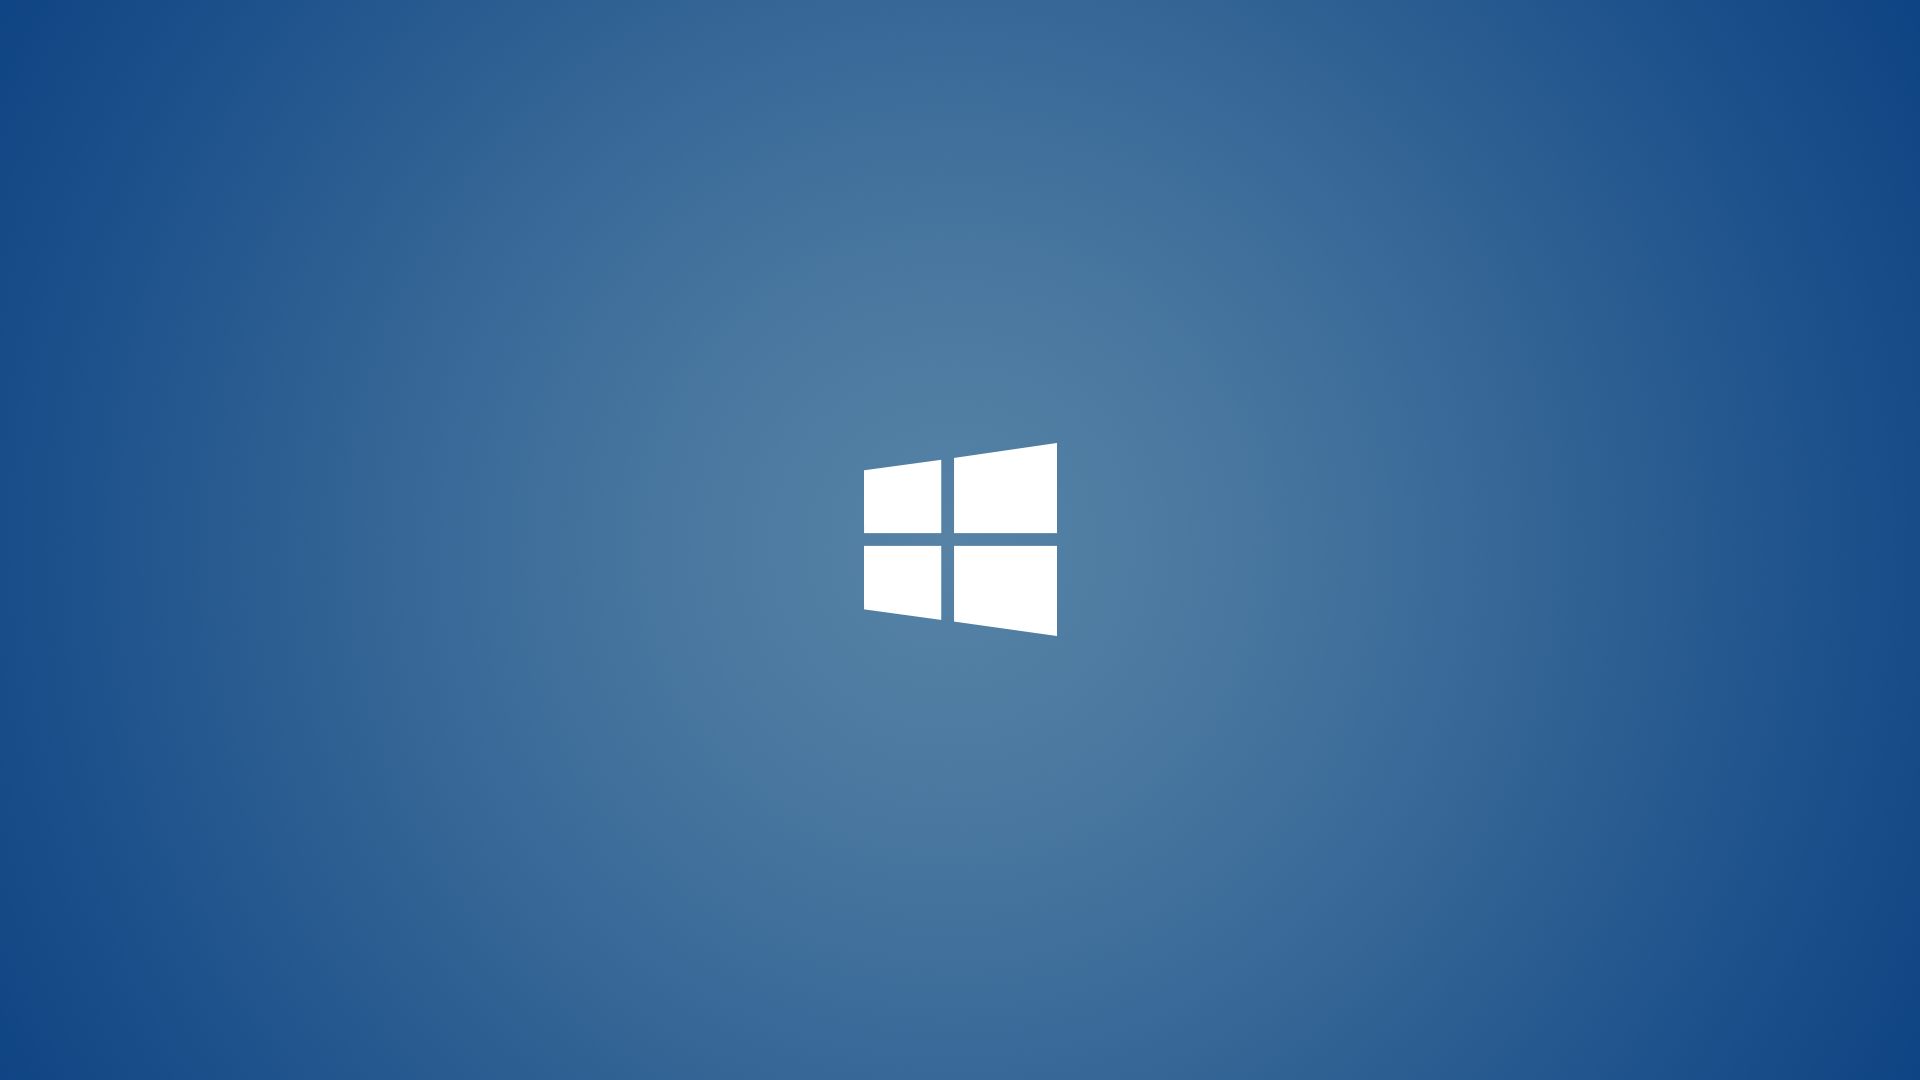 PCデスクトップにウィンドウズ, マイクロソフト, 青い, テクノロジー, ロゴ, ミニマリスト, ウィンドウズ10画像を無料でダウンロード